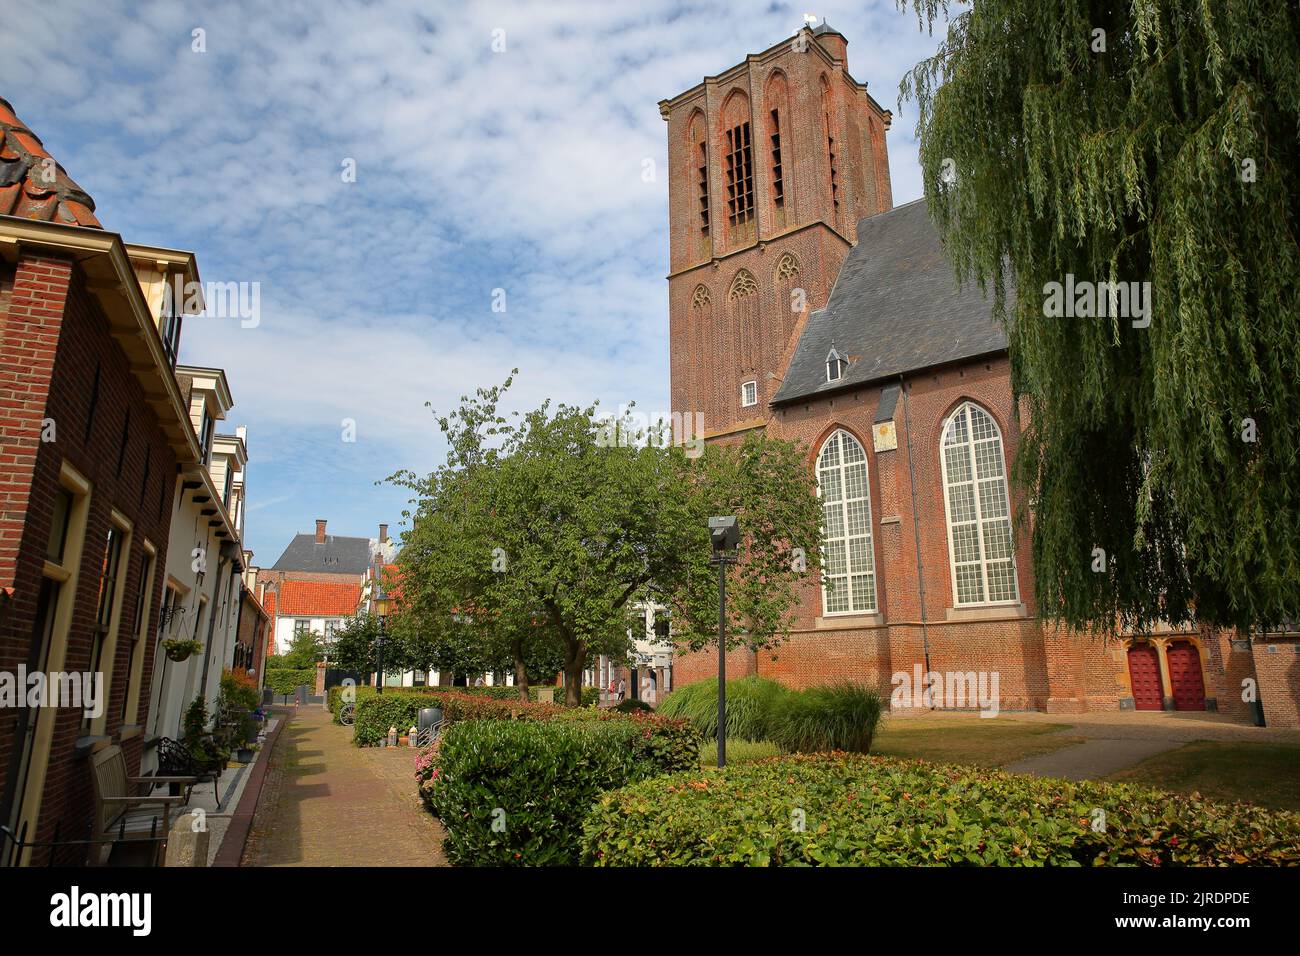 The historic Nicolaas church (Nicolaaskerk) in Elburg, Gelderland, Netherlands, viewed from Zuiderwalstraat street Stock Photo